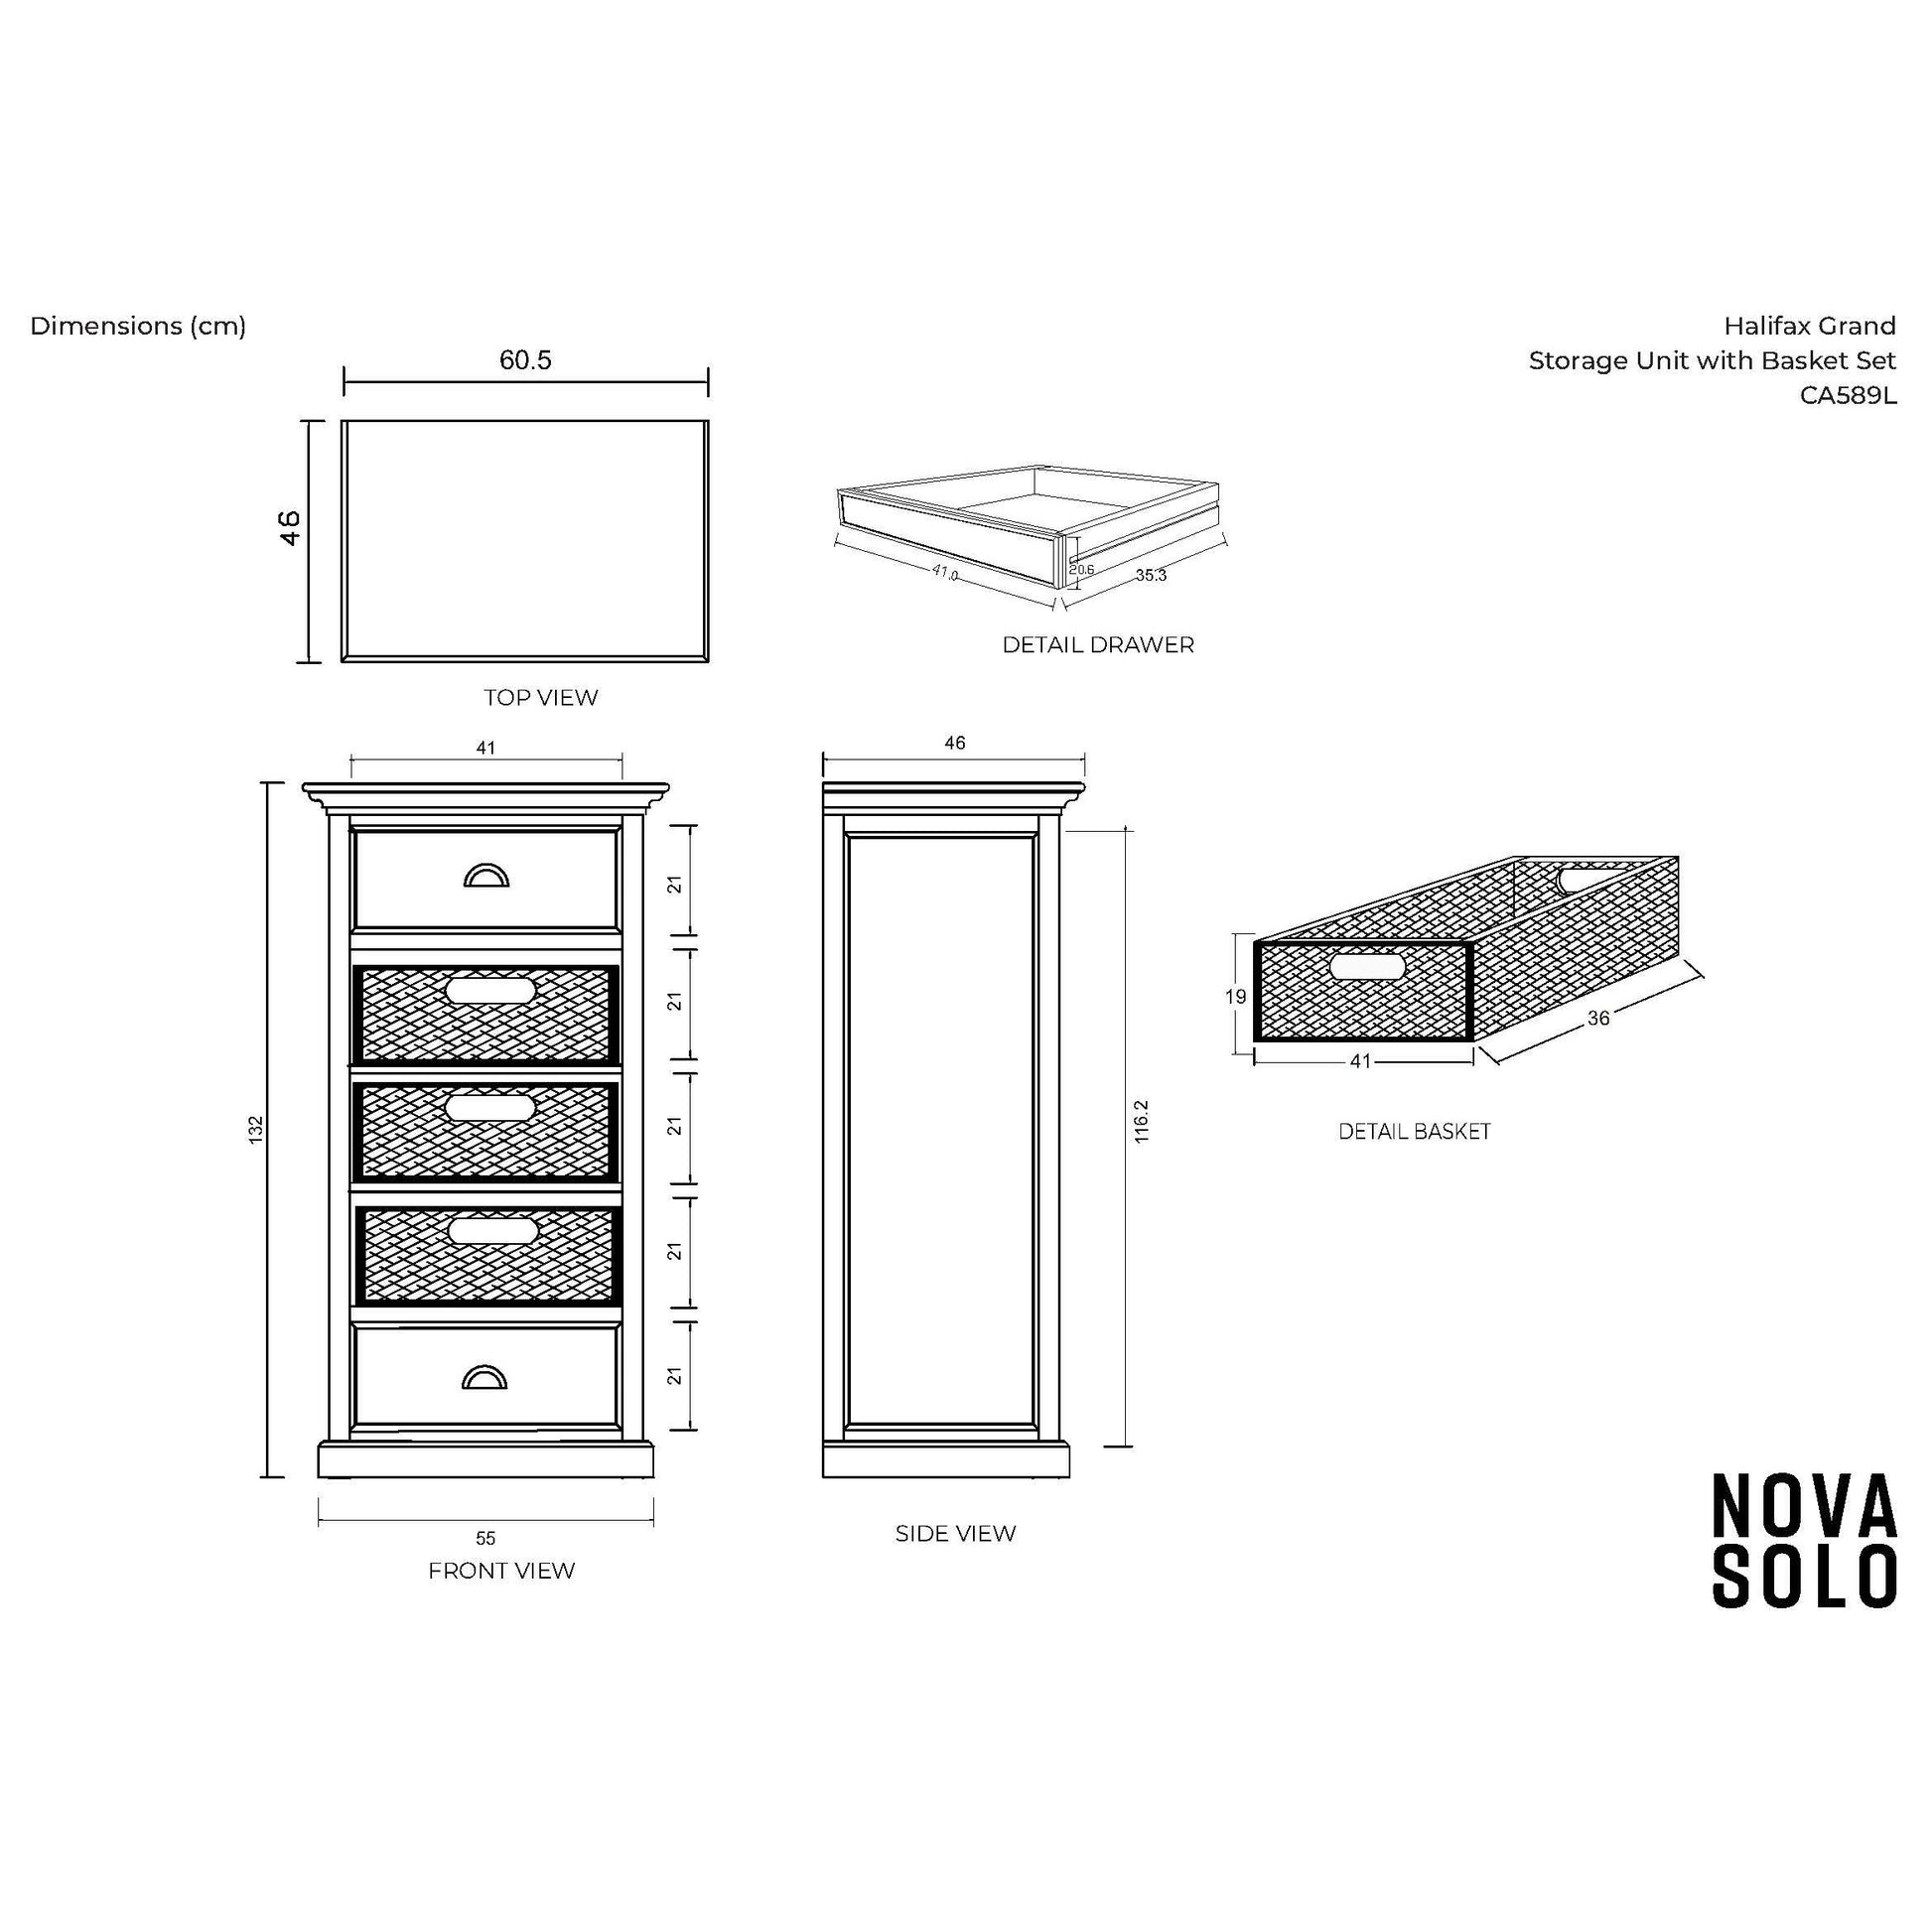 NovaSolo Halifax Grand 24" Classic White Mahogany Mini Storage Unit With 2 Drawers & 3 Rattan Baskets